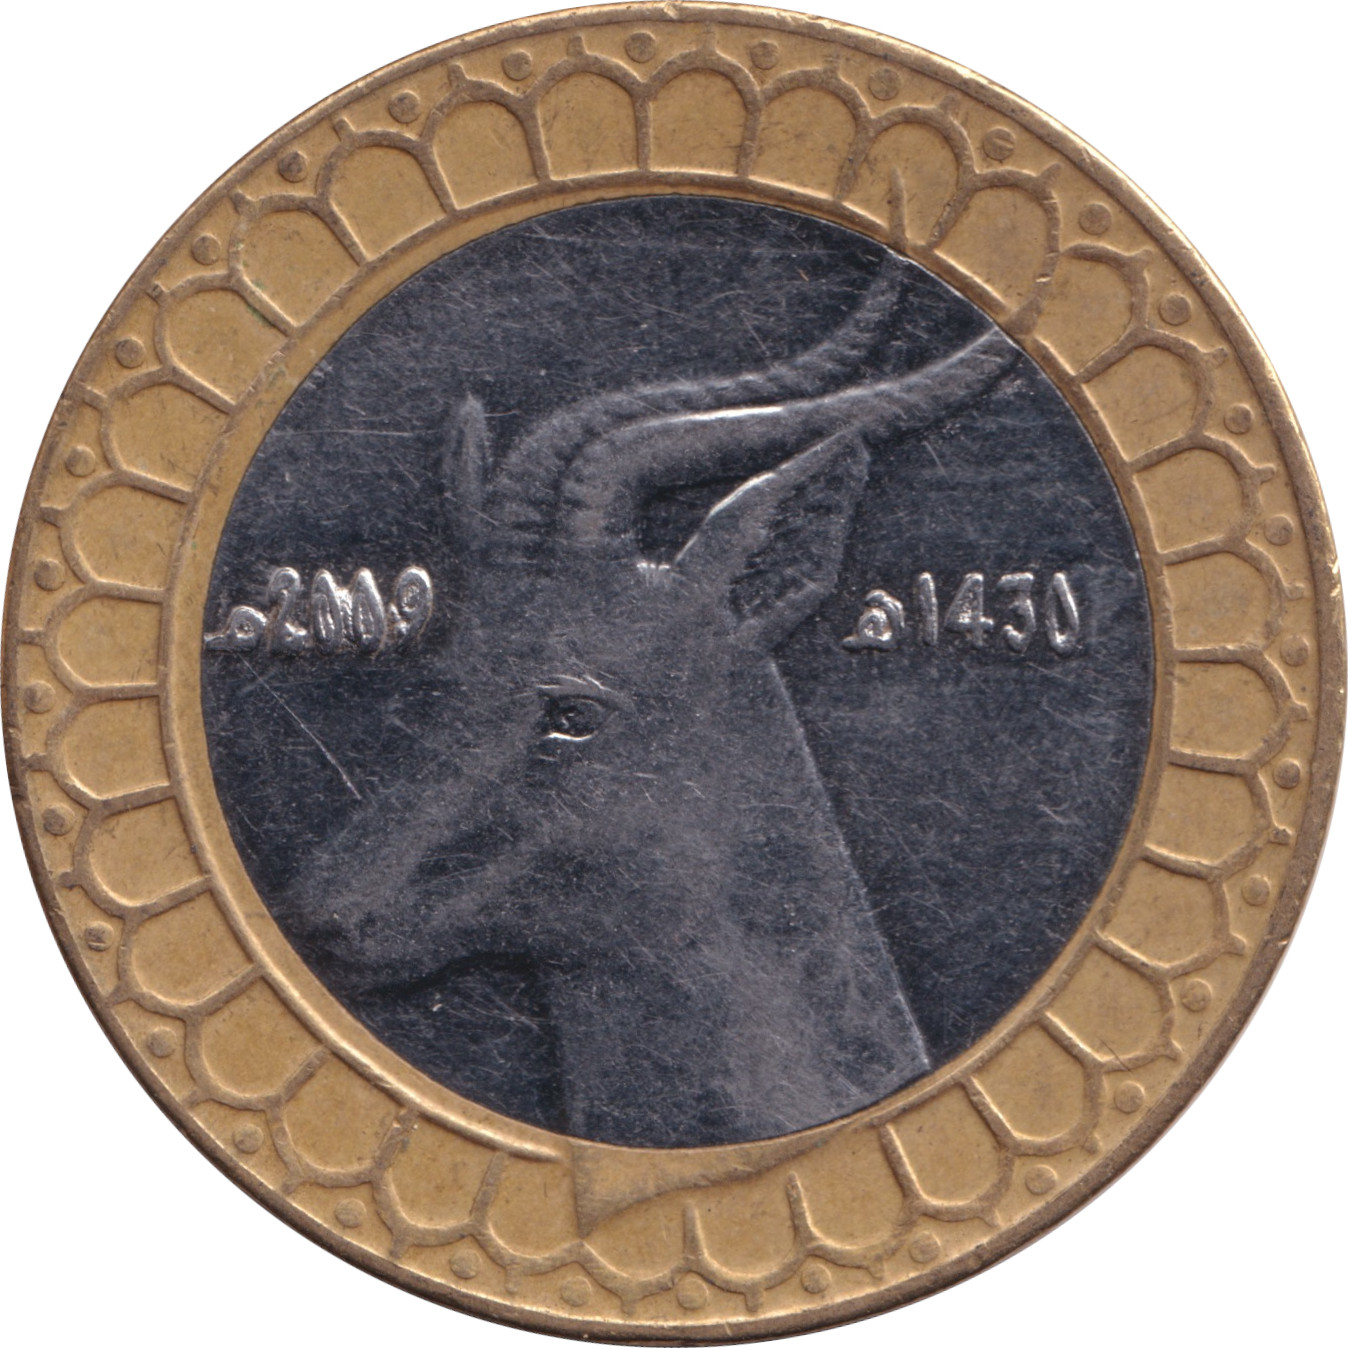 50 dinars - Gazelle